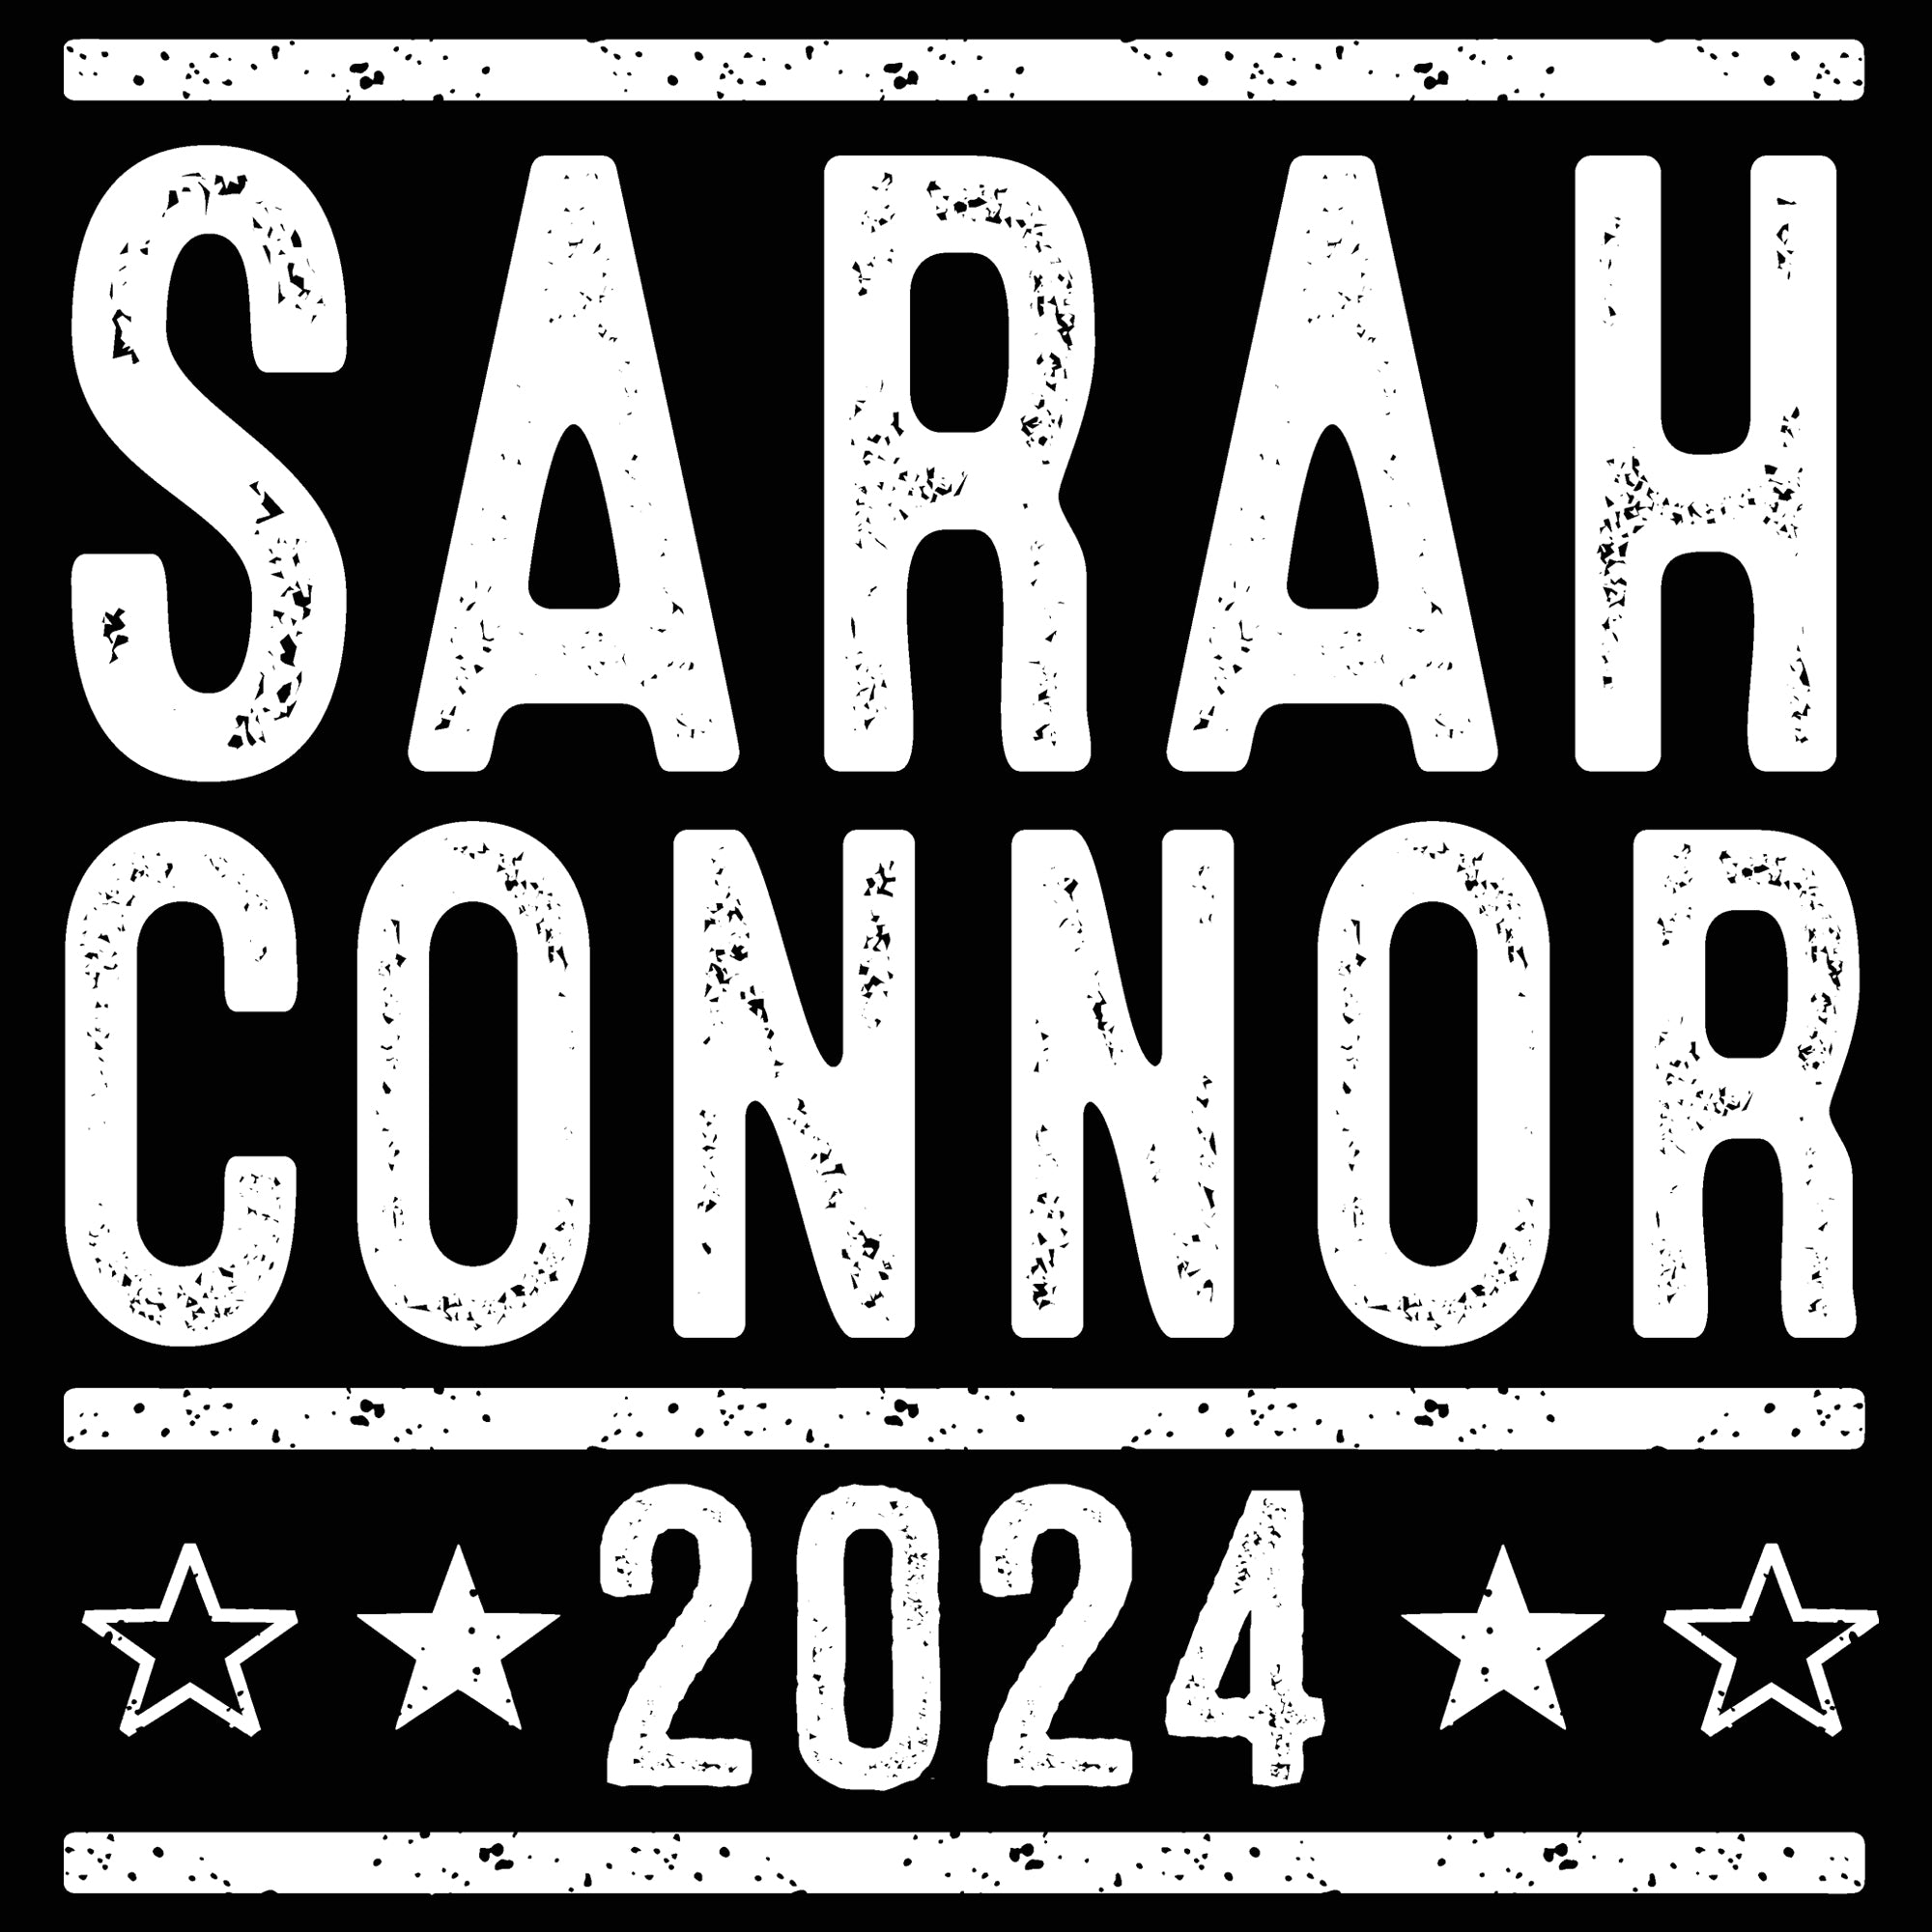 Sarah Connor 2024 Election Tshirt - Donkey Tees